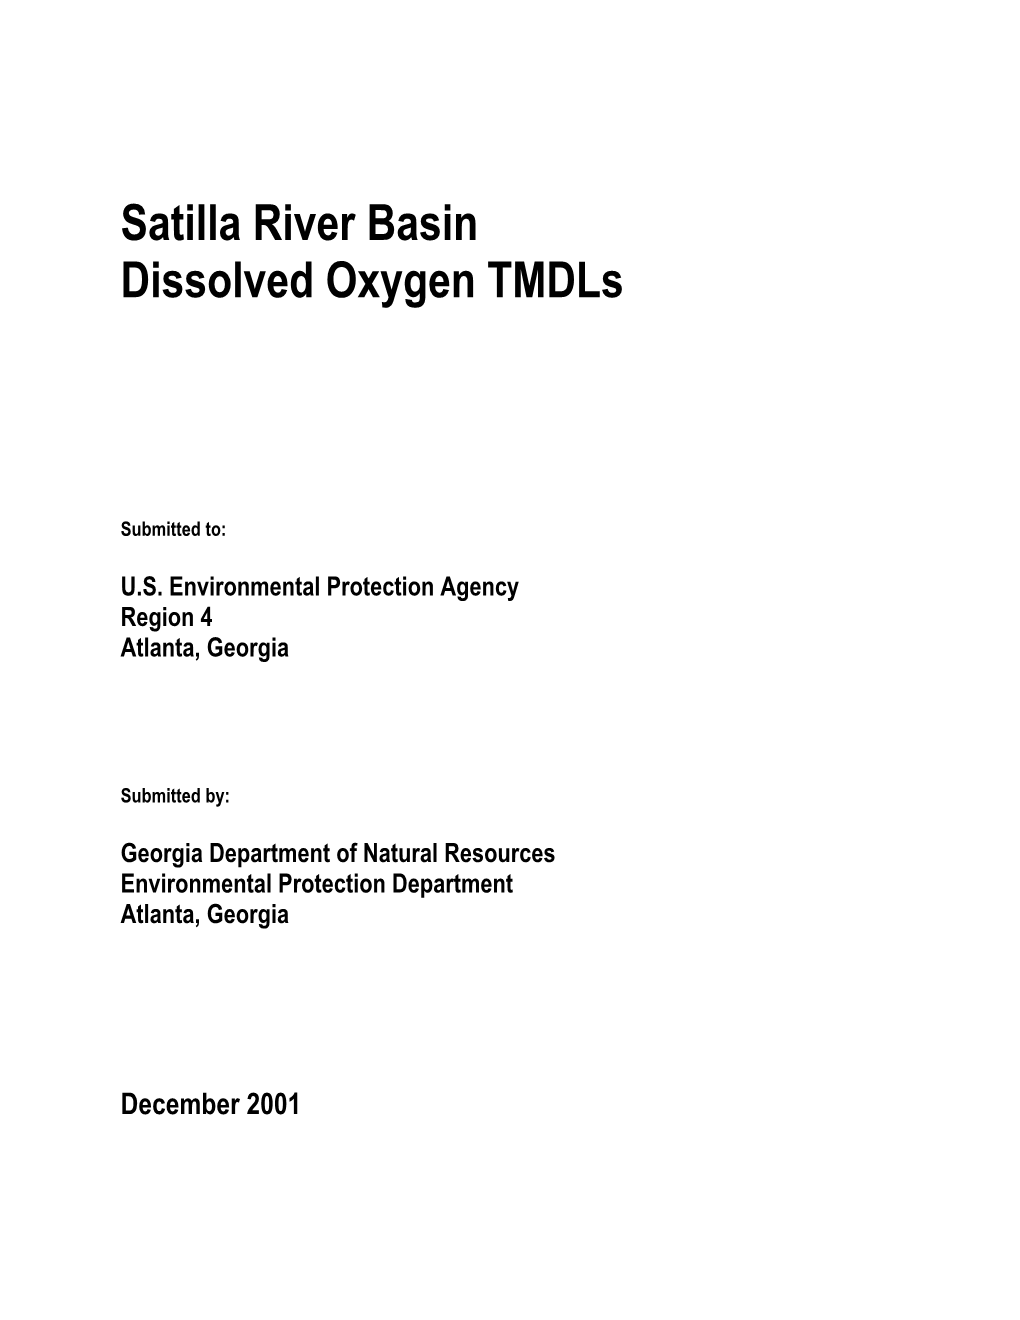 Satilla River Basin Dissolved Oxygen Tmdls